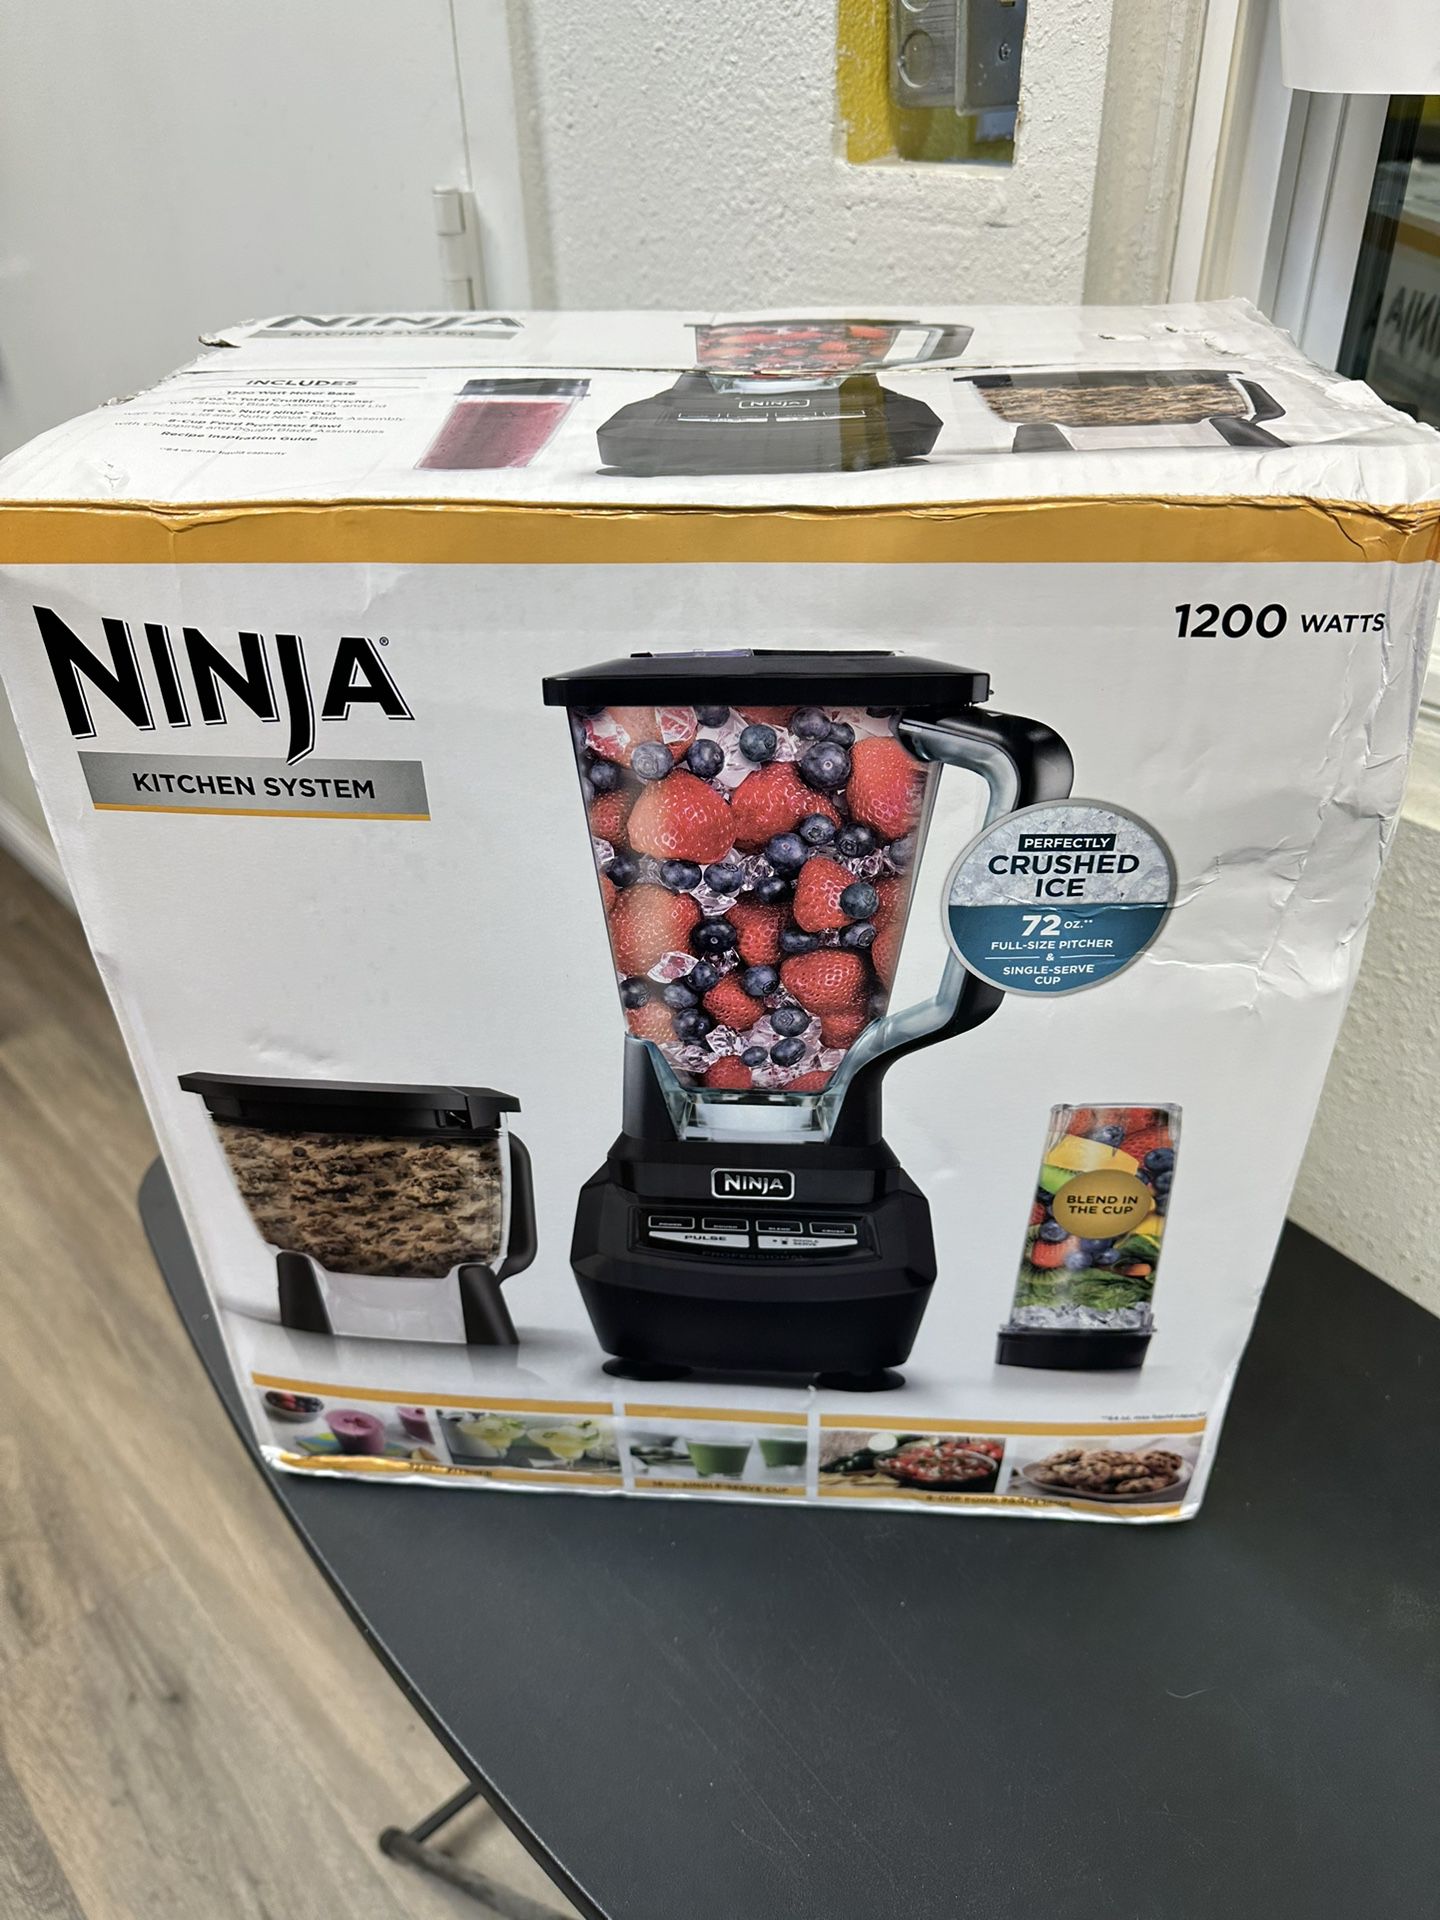 Ninja Foodi Power Blender Ultimate System for Sale in Las Vegas, NV -  OfferUp